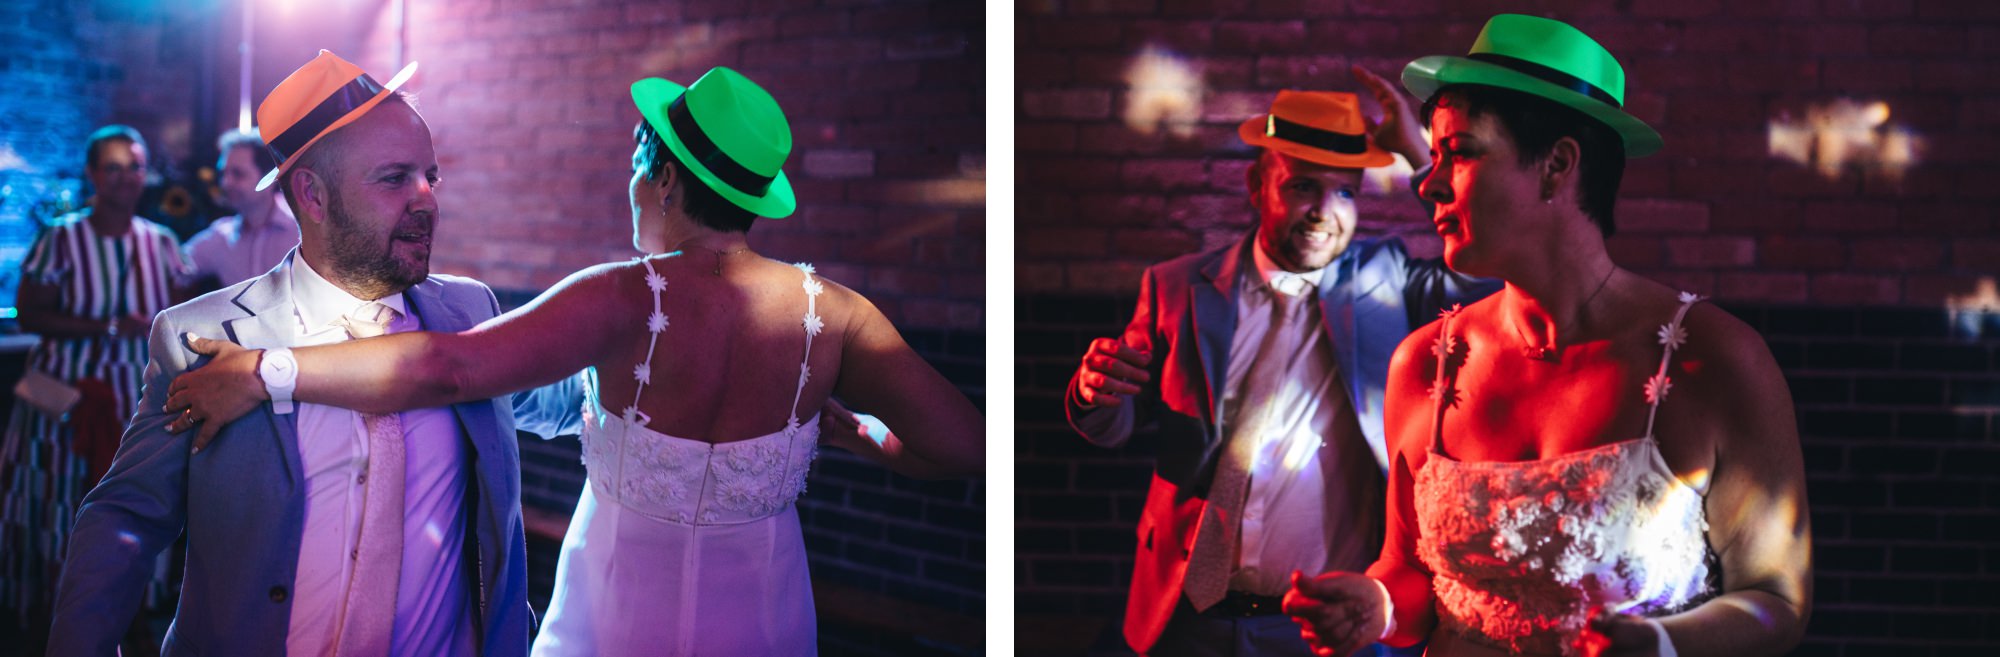 bride and groom in dress up trilby hats on dancefloor